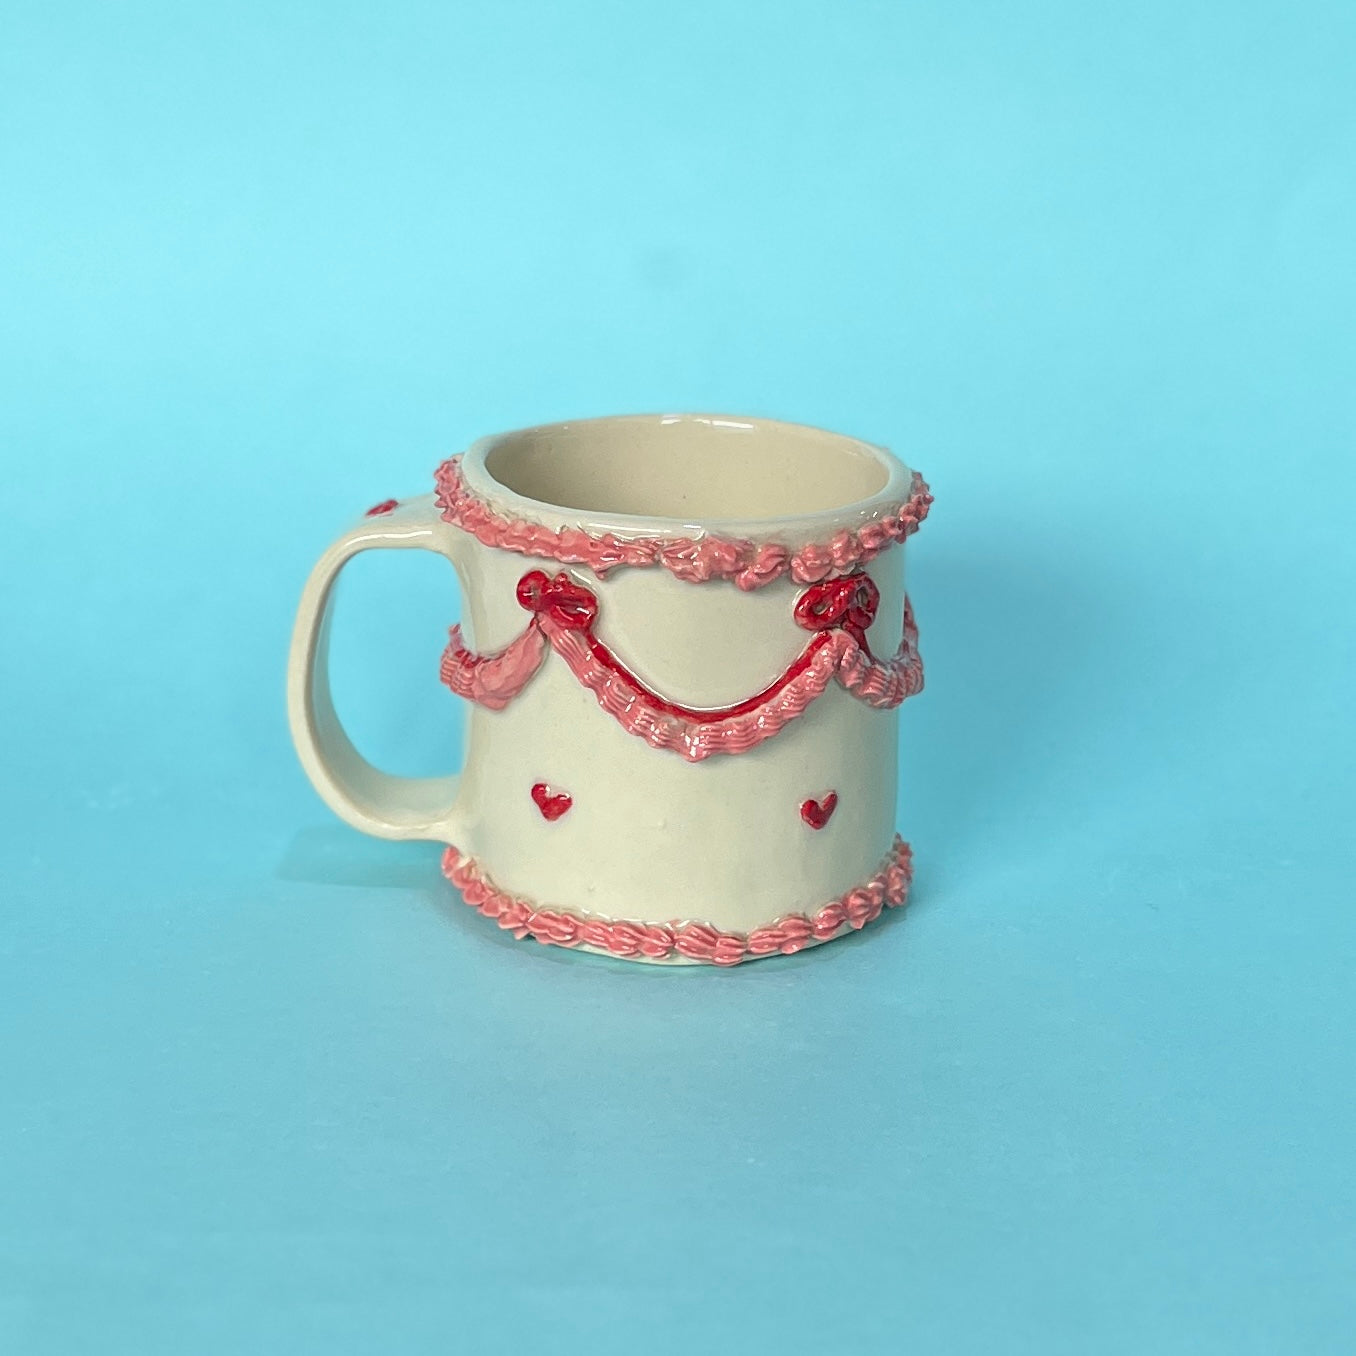 Pink and Red Royal Icing Mug